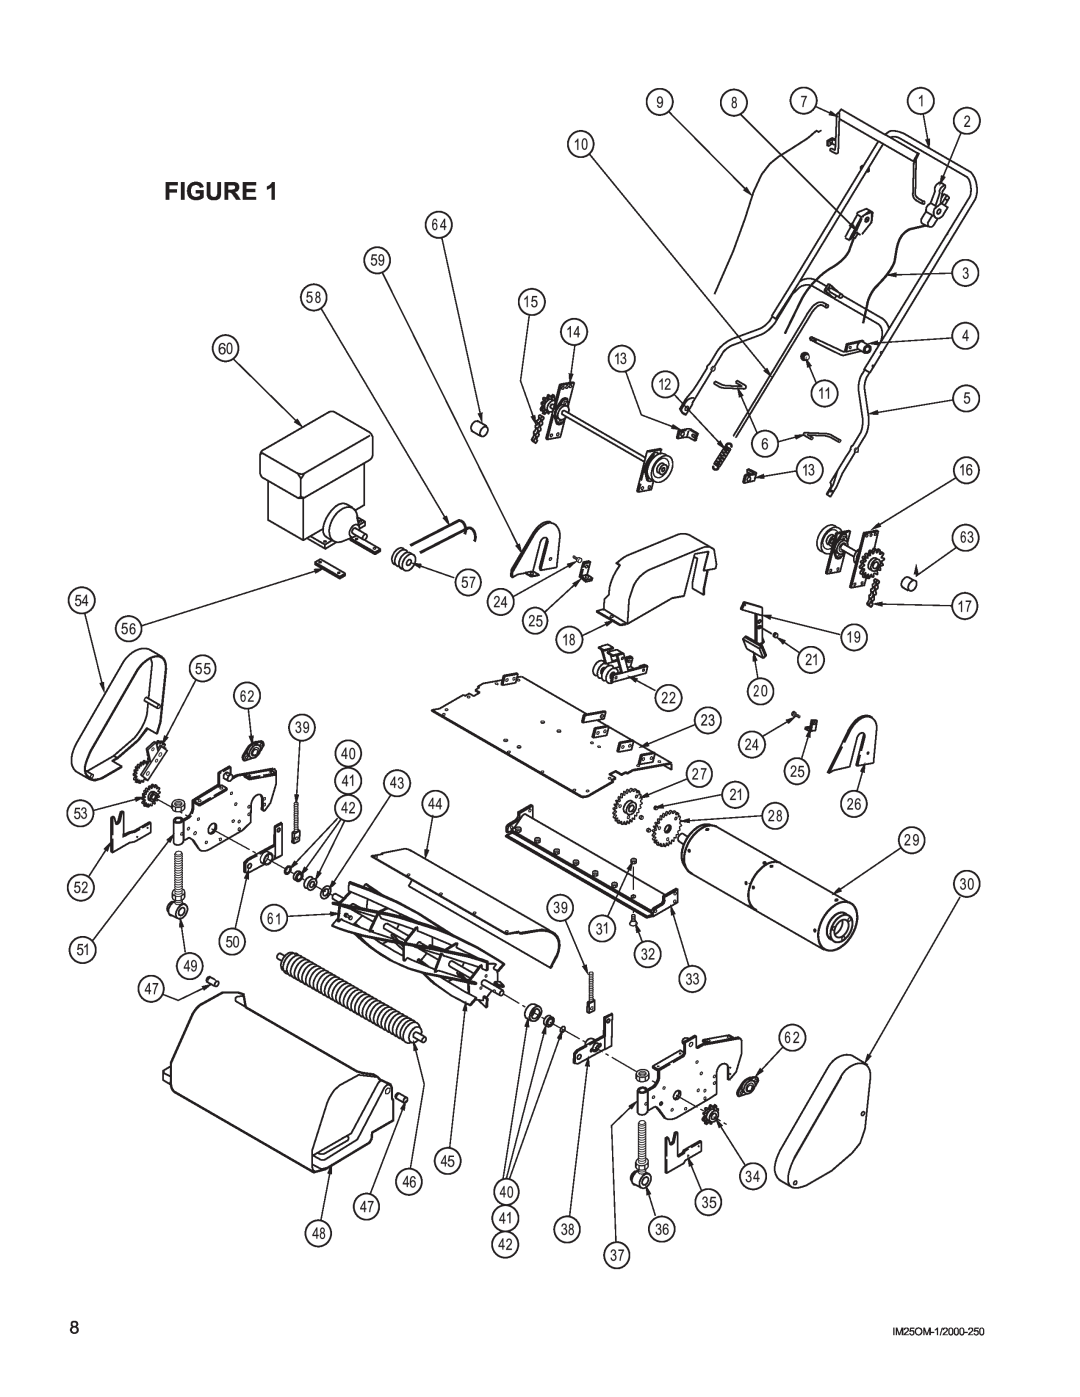 National Mower manual IM25OM-1/2000-250 